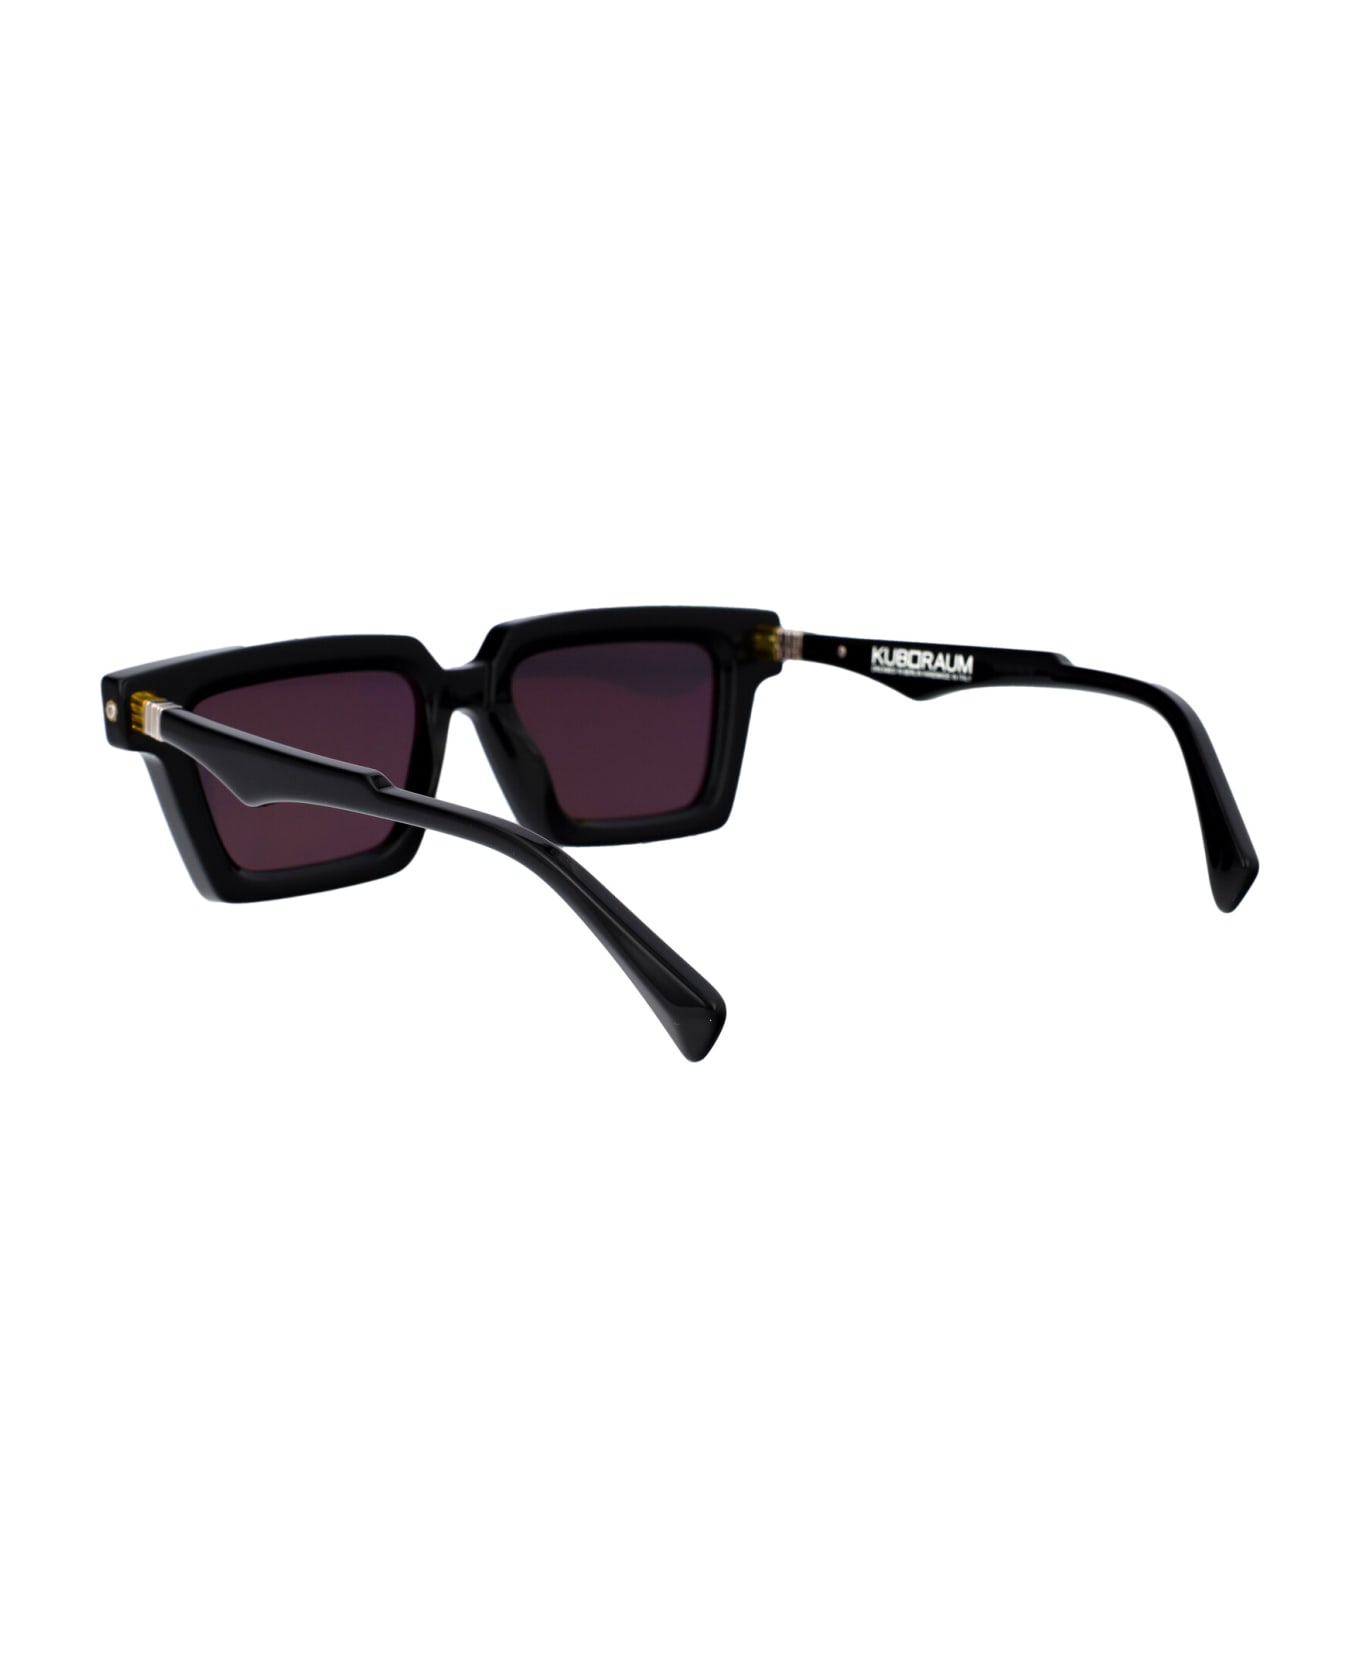 Kuboraum Maske Q2 Sunglasses - BSY 2grey